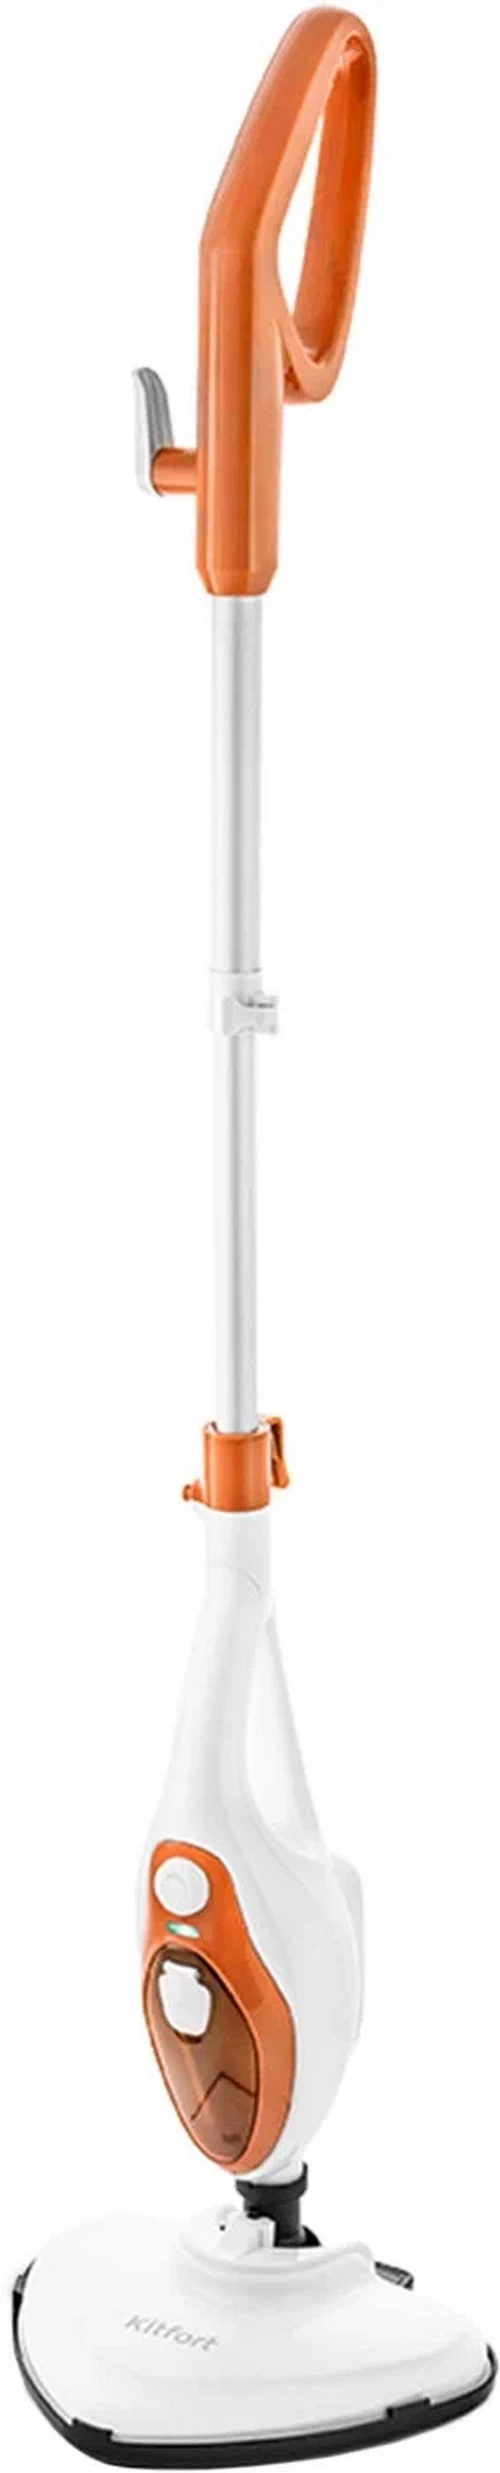 Паровая швабра Kitfort KT-1004-3 белый, оранжевый парогенератор kitfort кт 9135 2 белый оранжевый